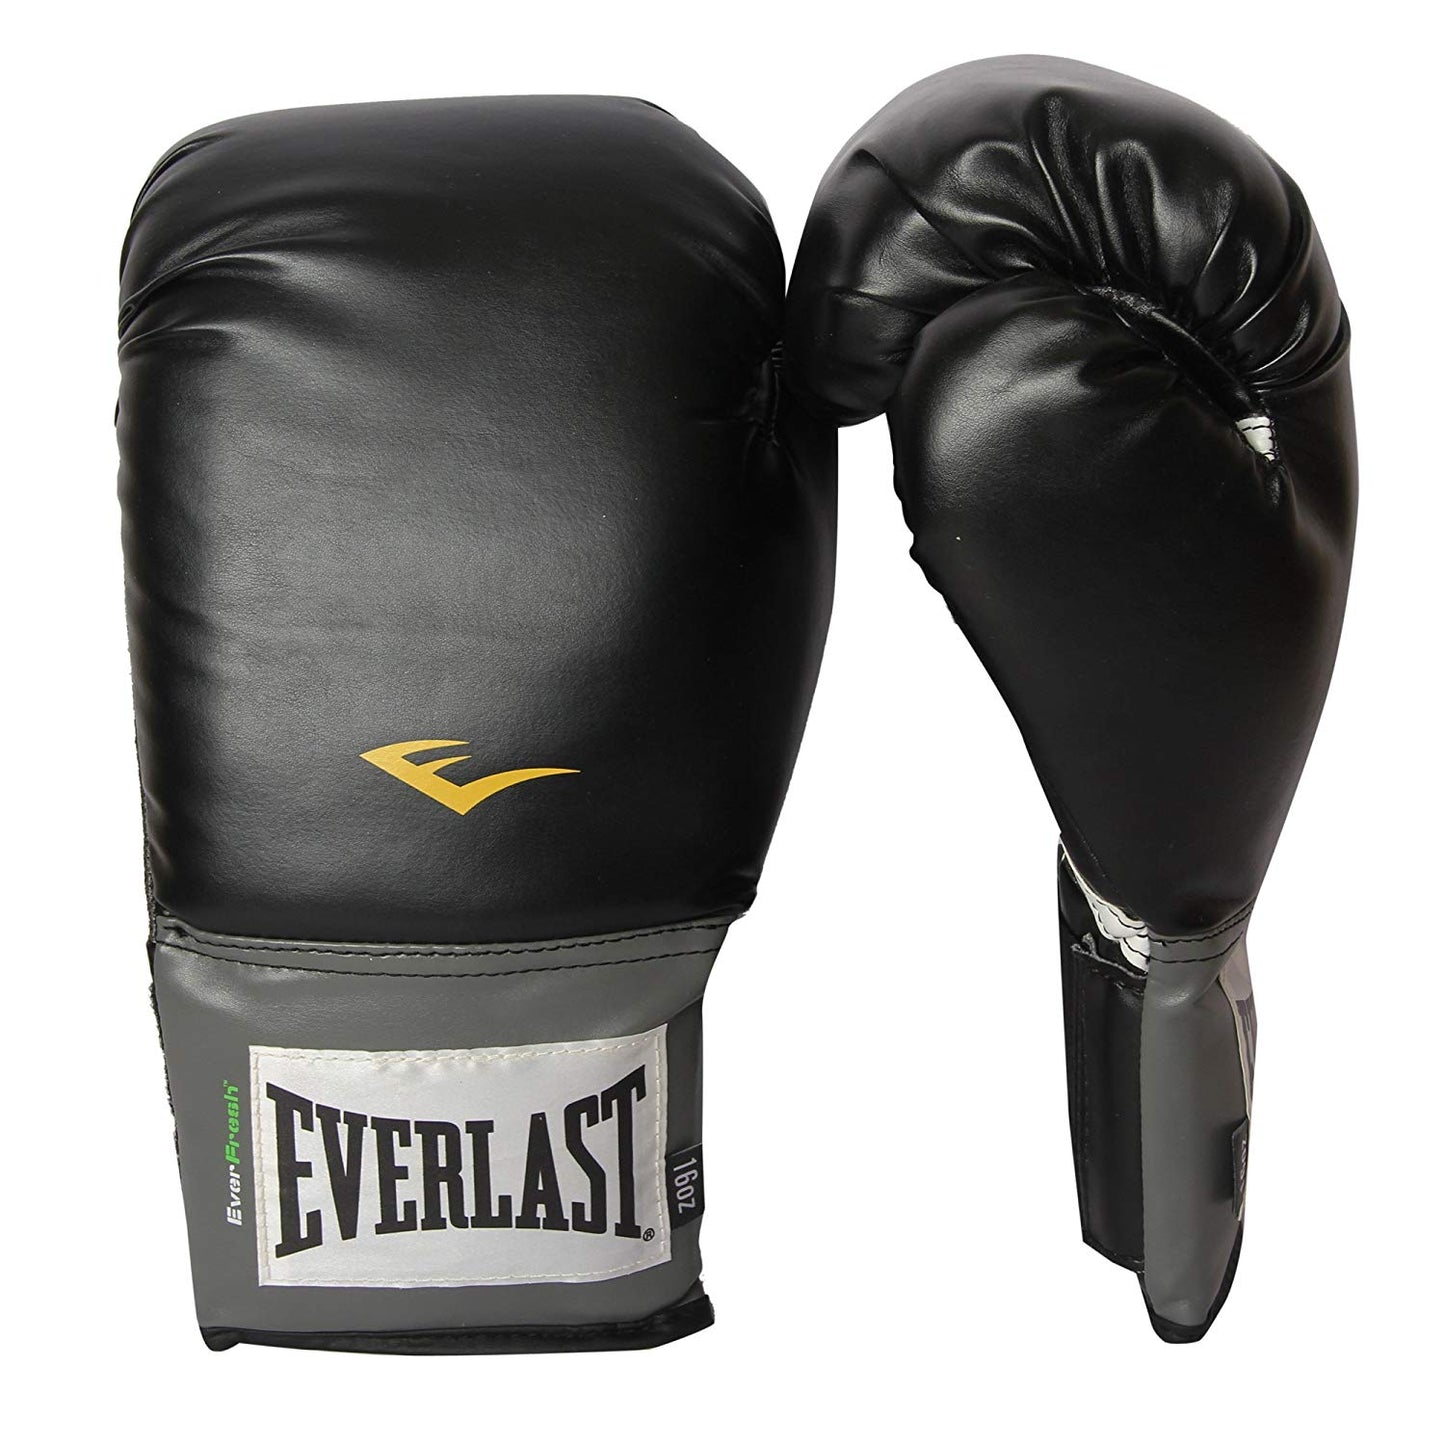 Everlast 1200026 Pro Style Training Boxing Gloves (Black) - Best Price online Prokicksports.com